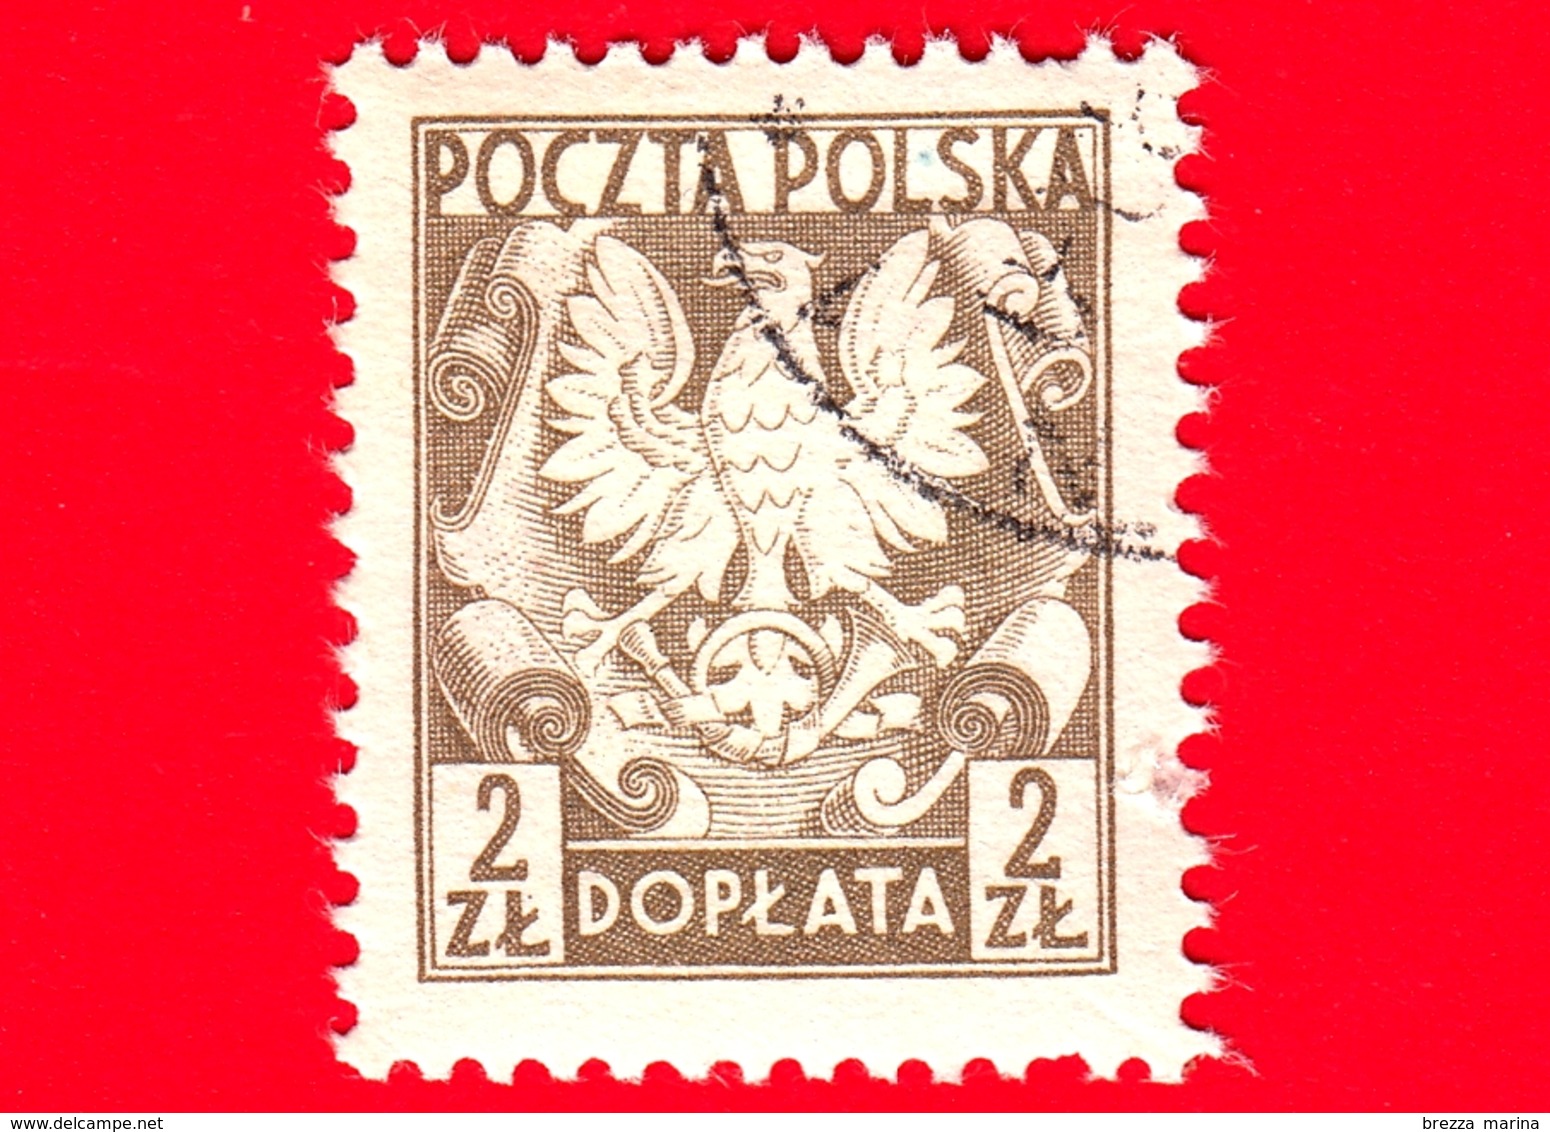 POLONIA - POLSKA - Usato - 1951 - Segnatasse - Taxe - Aquila - Coat Of Arms Of Poland - 2 - Postage Due